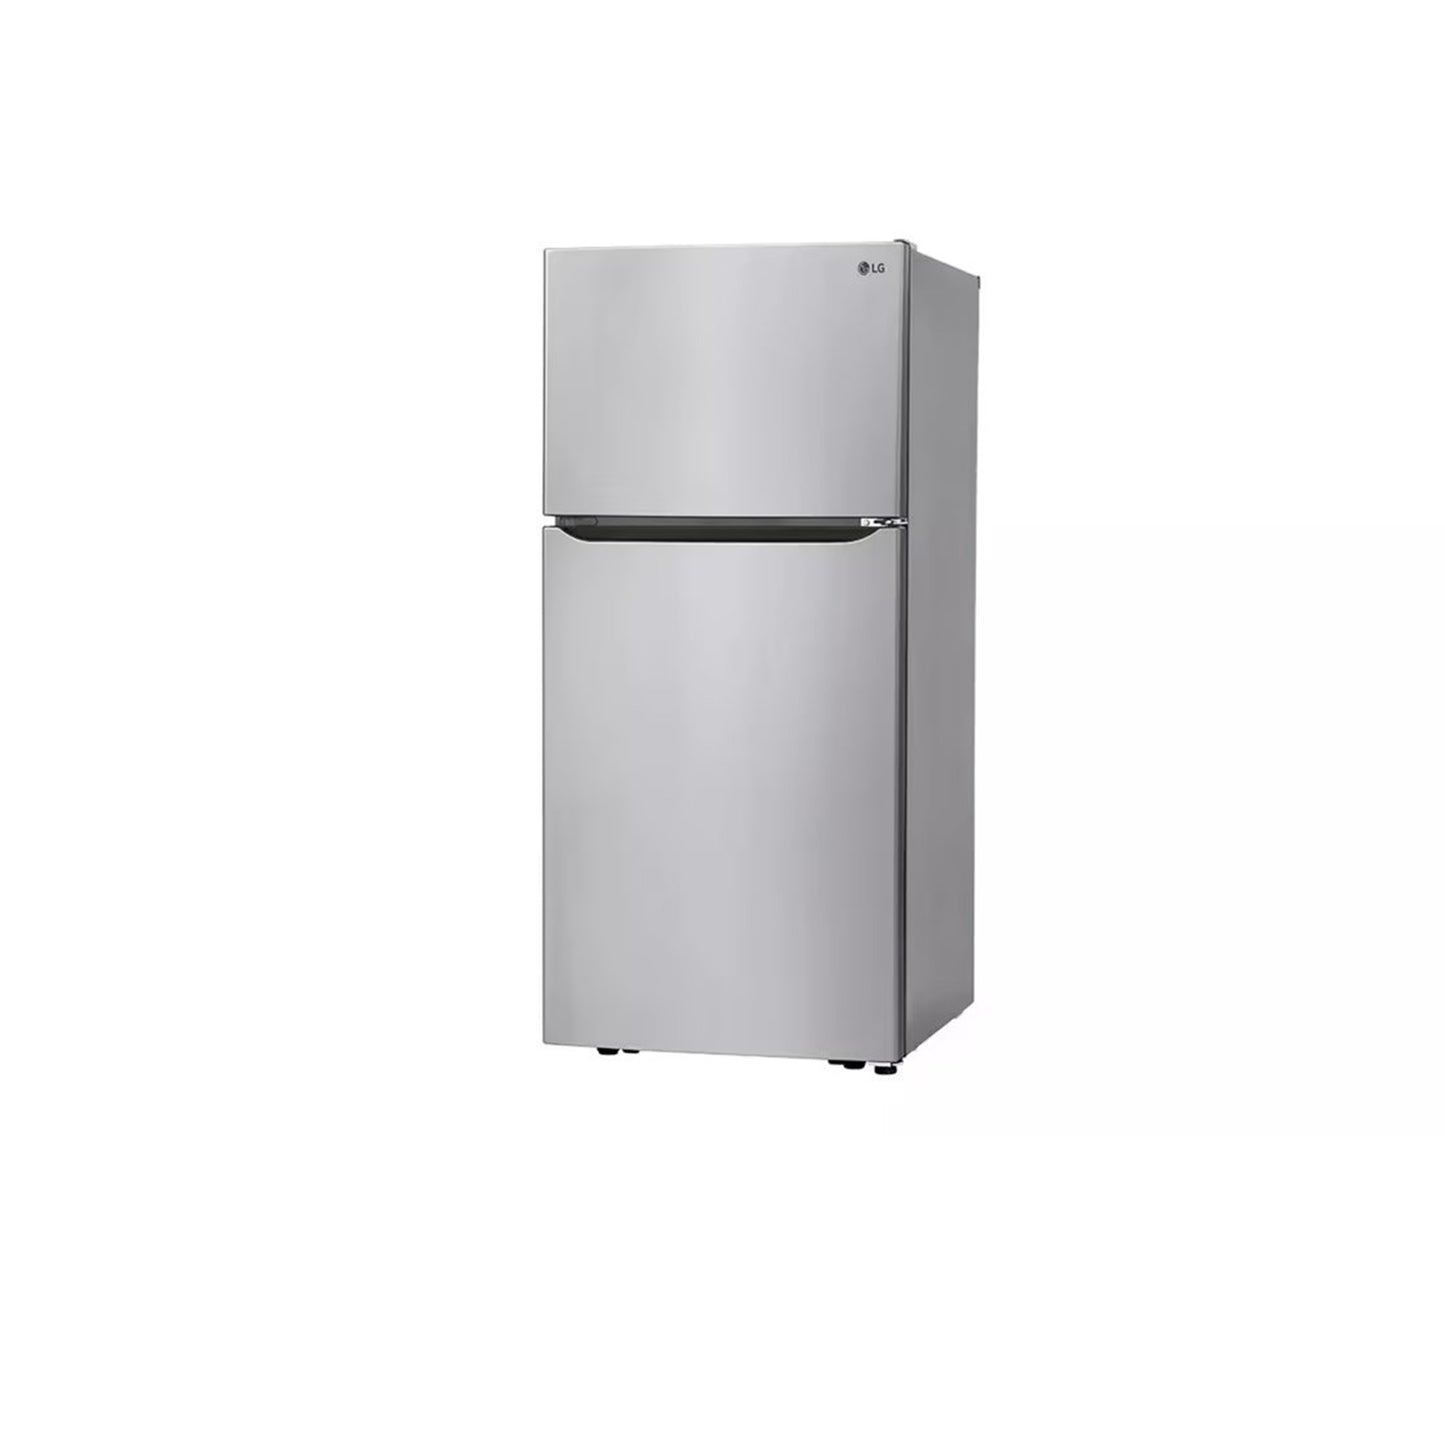 24 cu. ft. Top Freezer Refrigerator